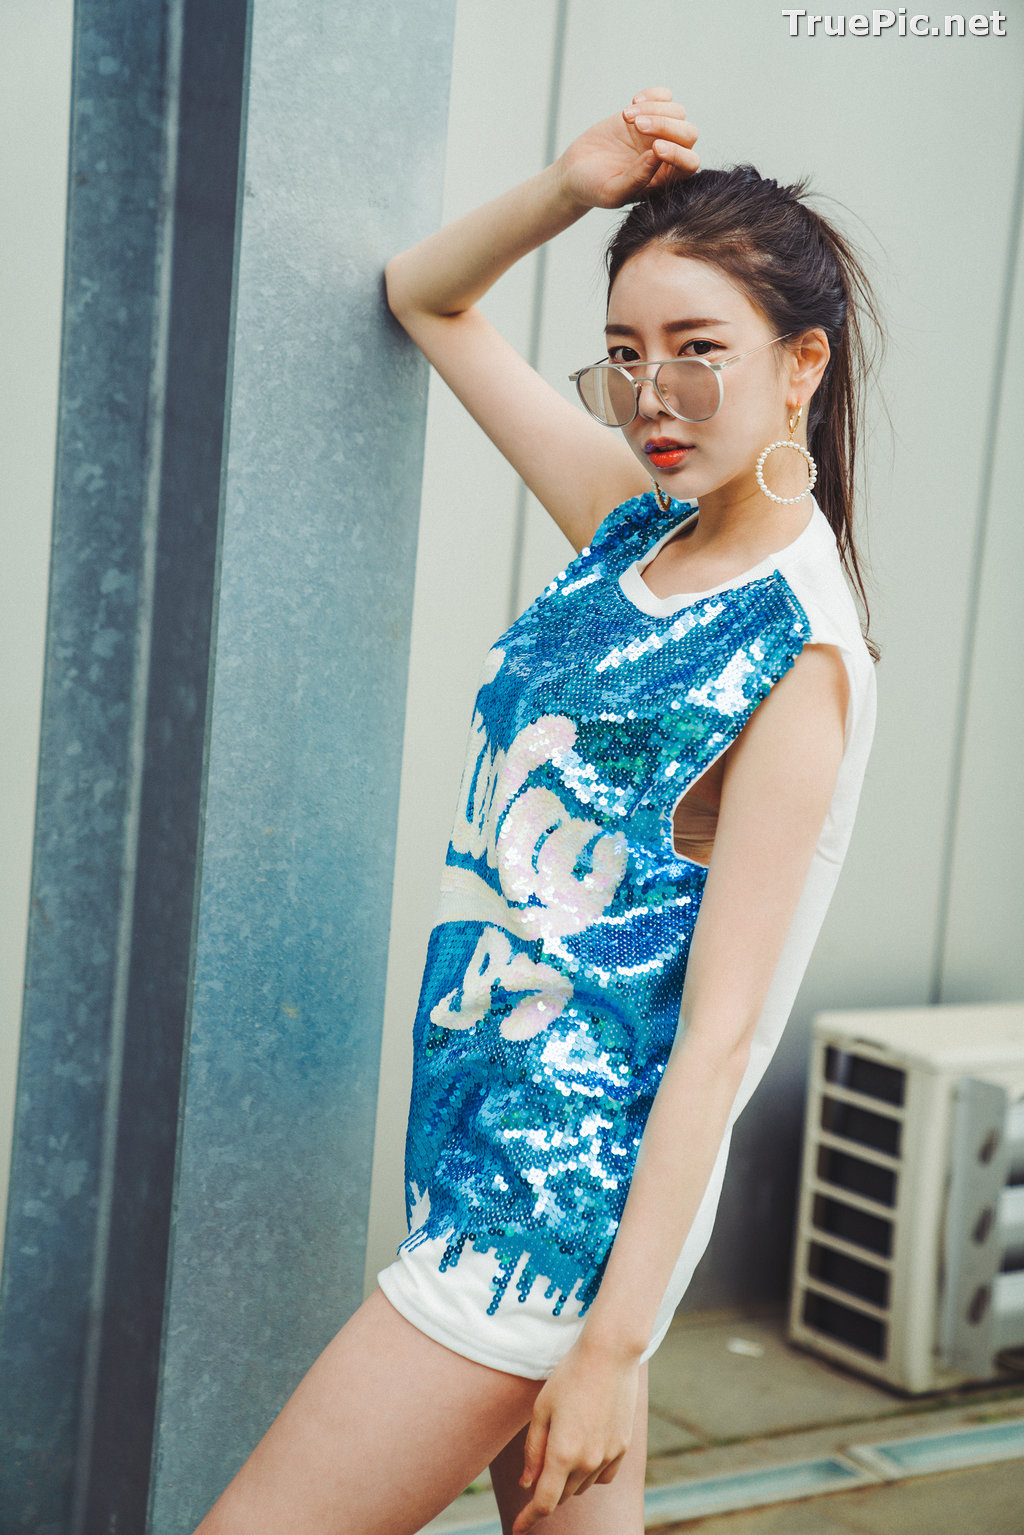 Image Korean Hot Model - Go Eun Yang - Outdoor Photoshoot Collection - TruePic.net - Picture-8